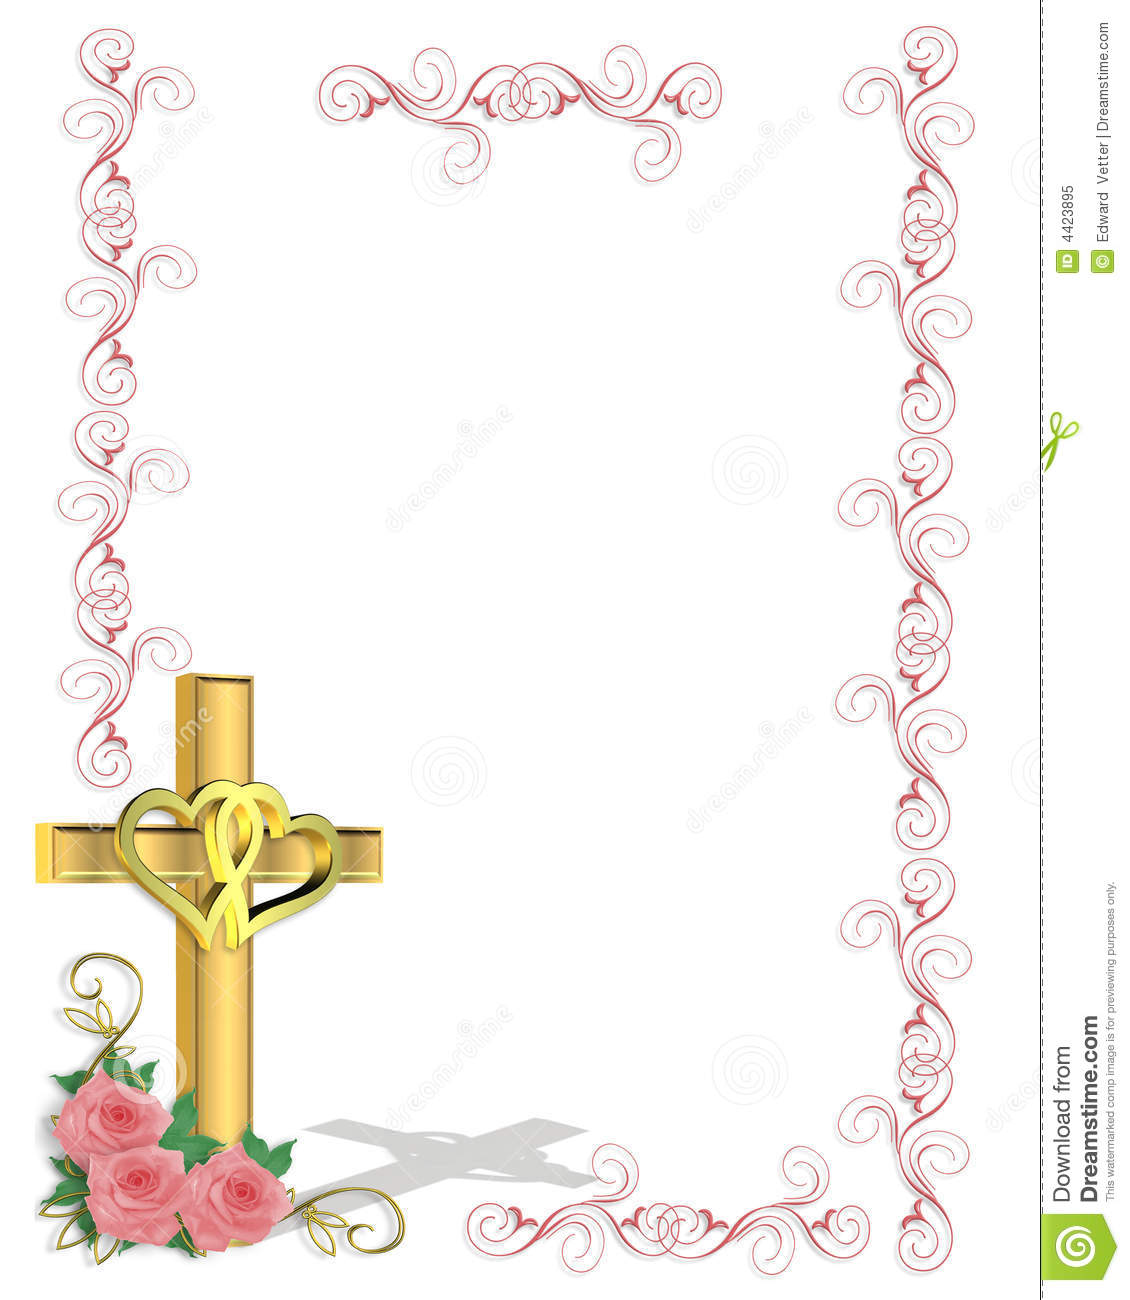 Wedding Invitation Christian Cross Royalty Free Stock Photo   Image